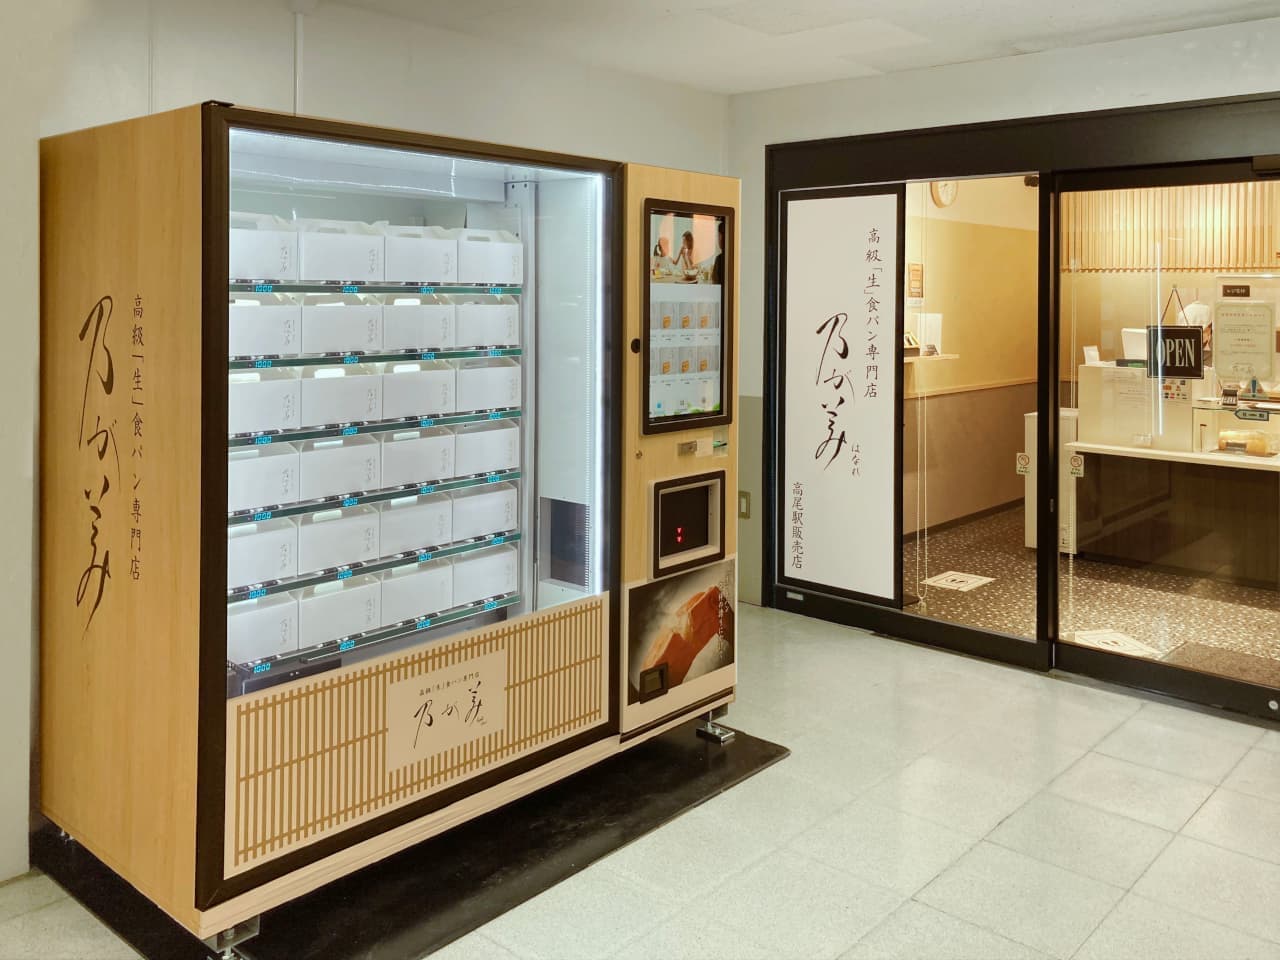 Vending machine dedicated to Nogami's bread